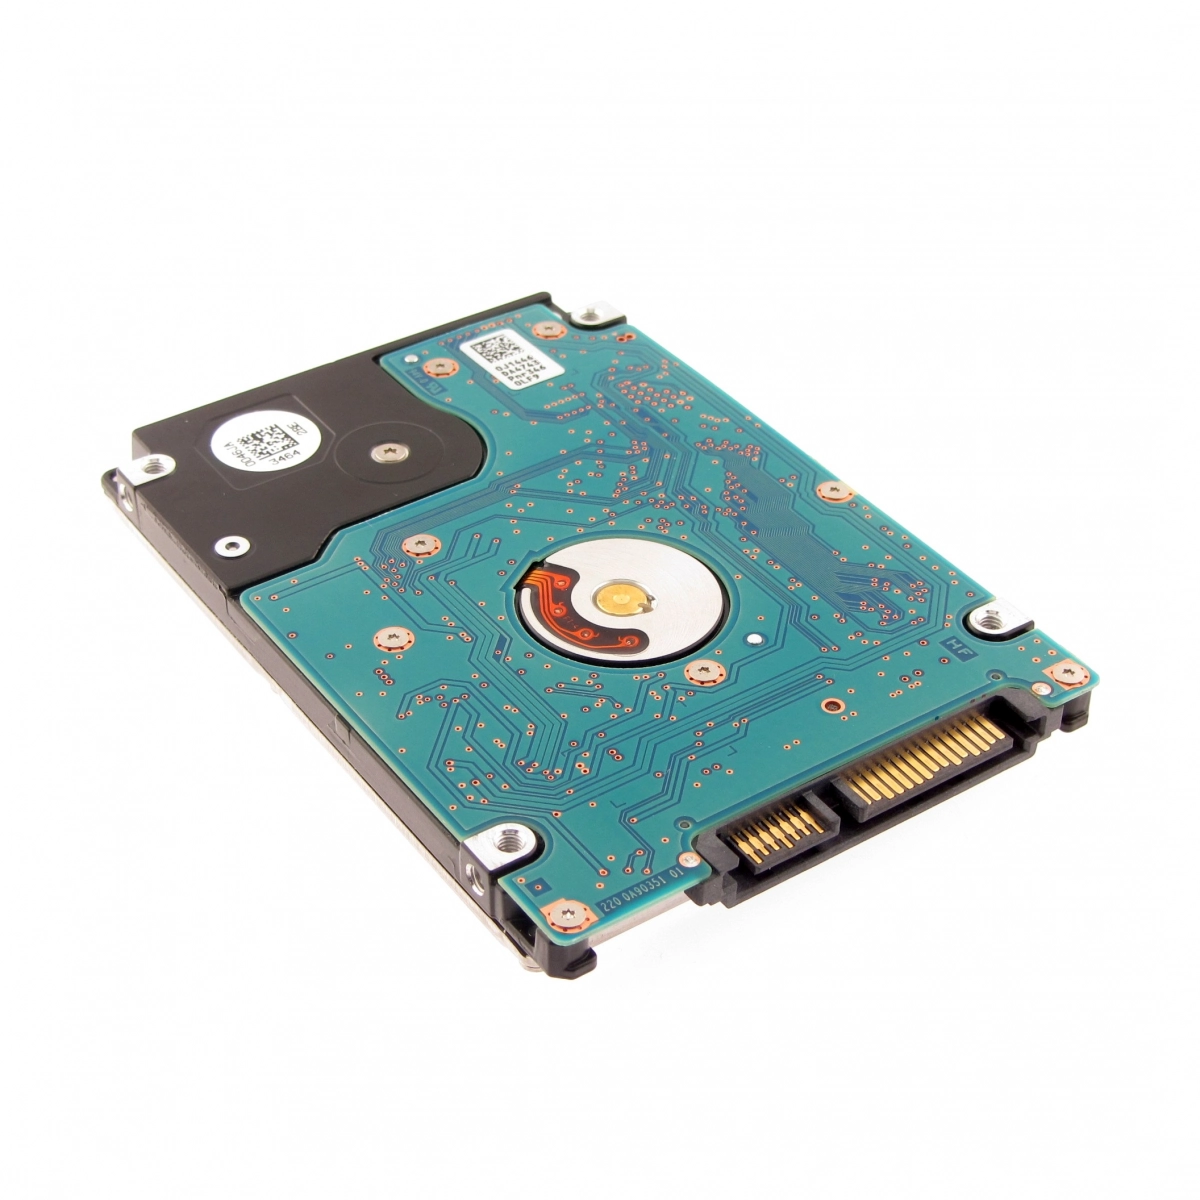 Notebook-Festplatte 1TB, 5400rpm, 128MB für FUJITSU LifeBook S751